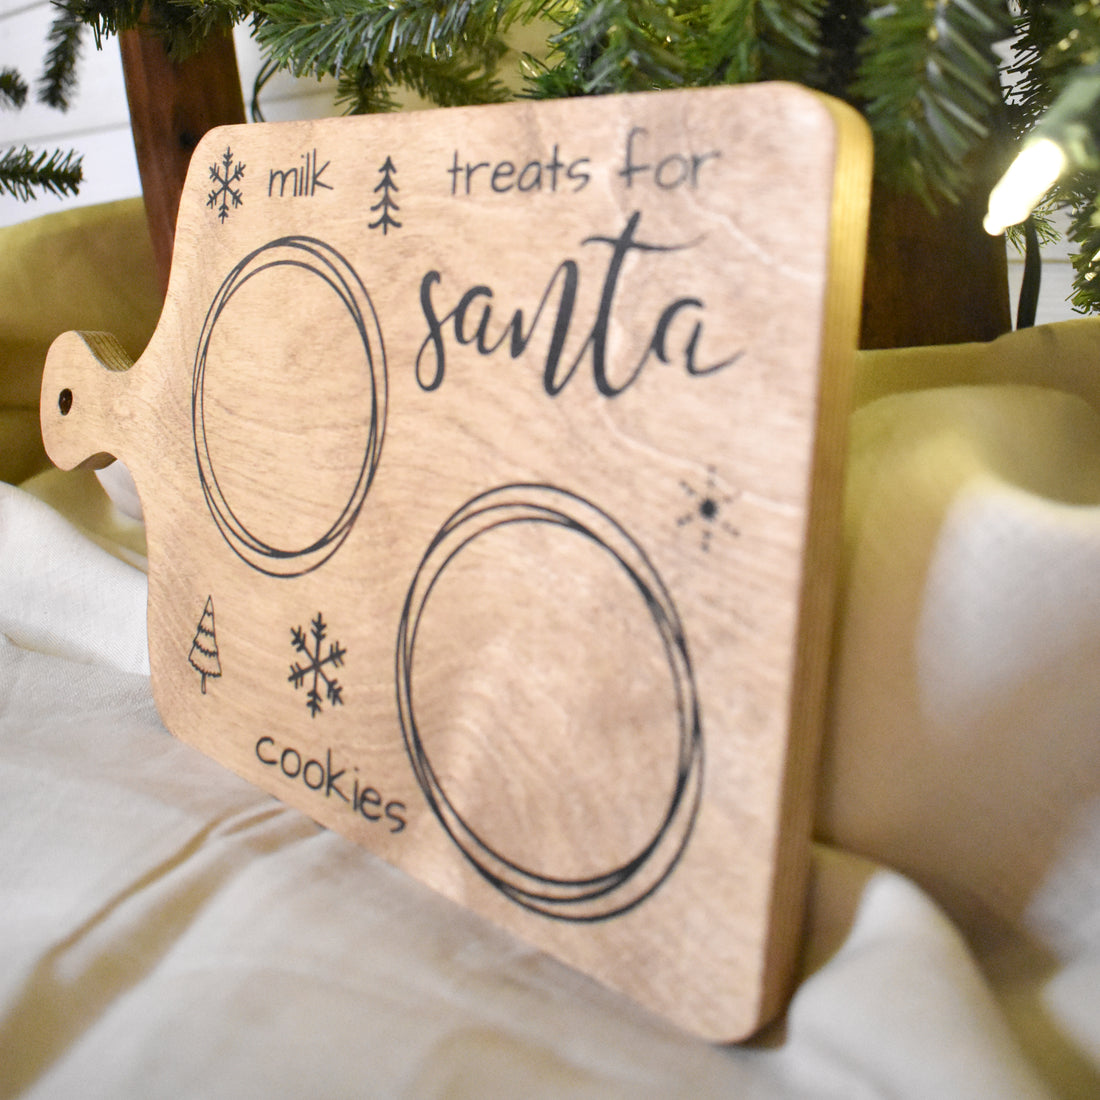 cutting board: wood-burned | treats for santa